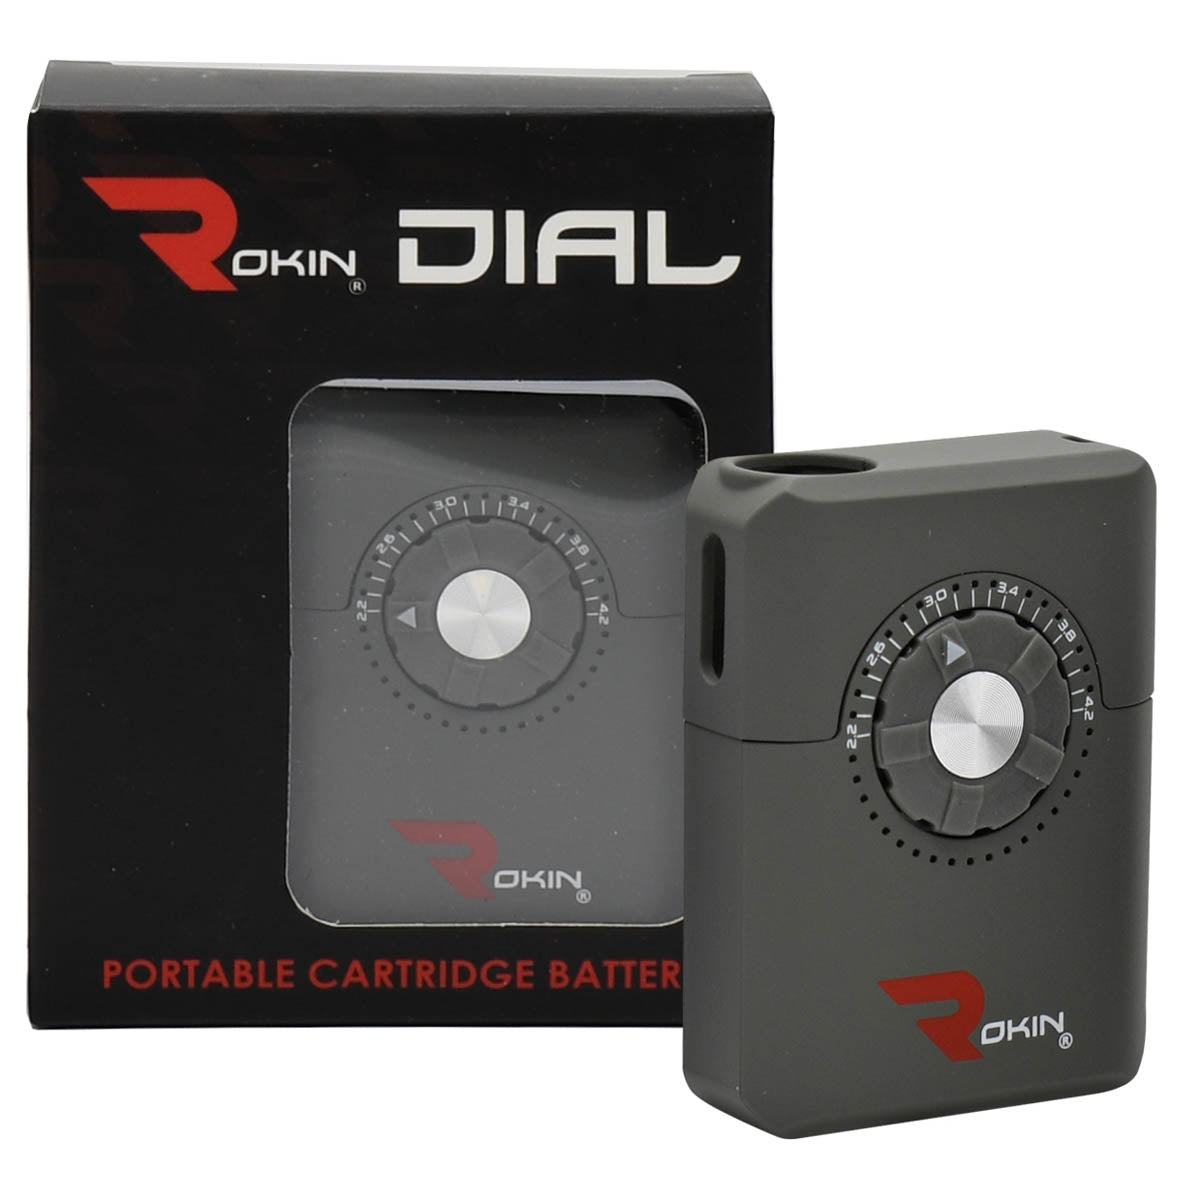 Rokin Dial 510 Cartridge Battery